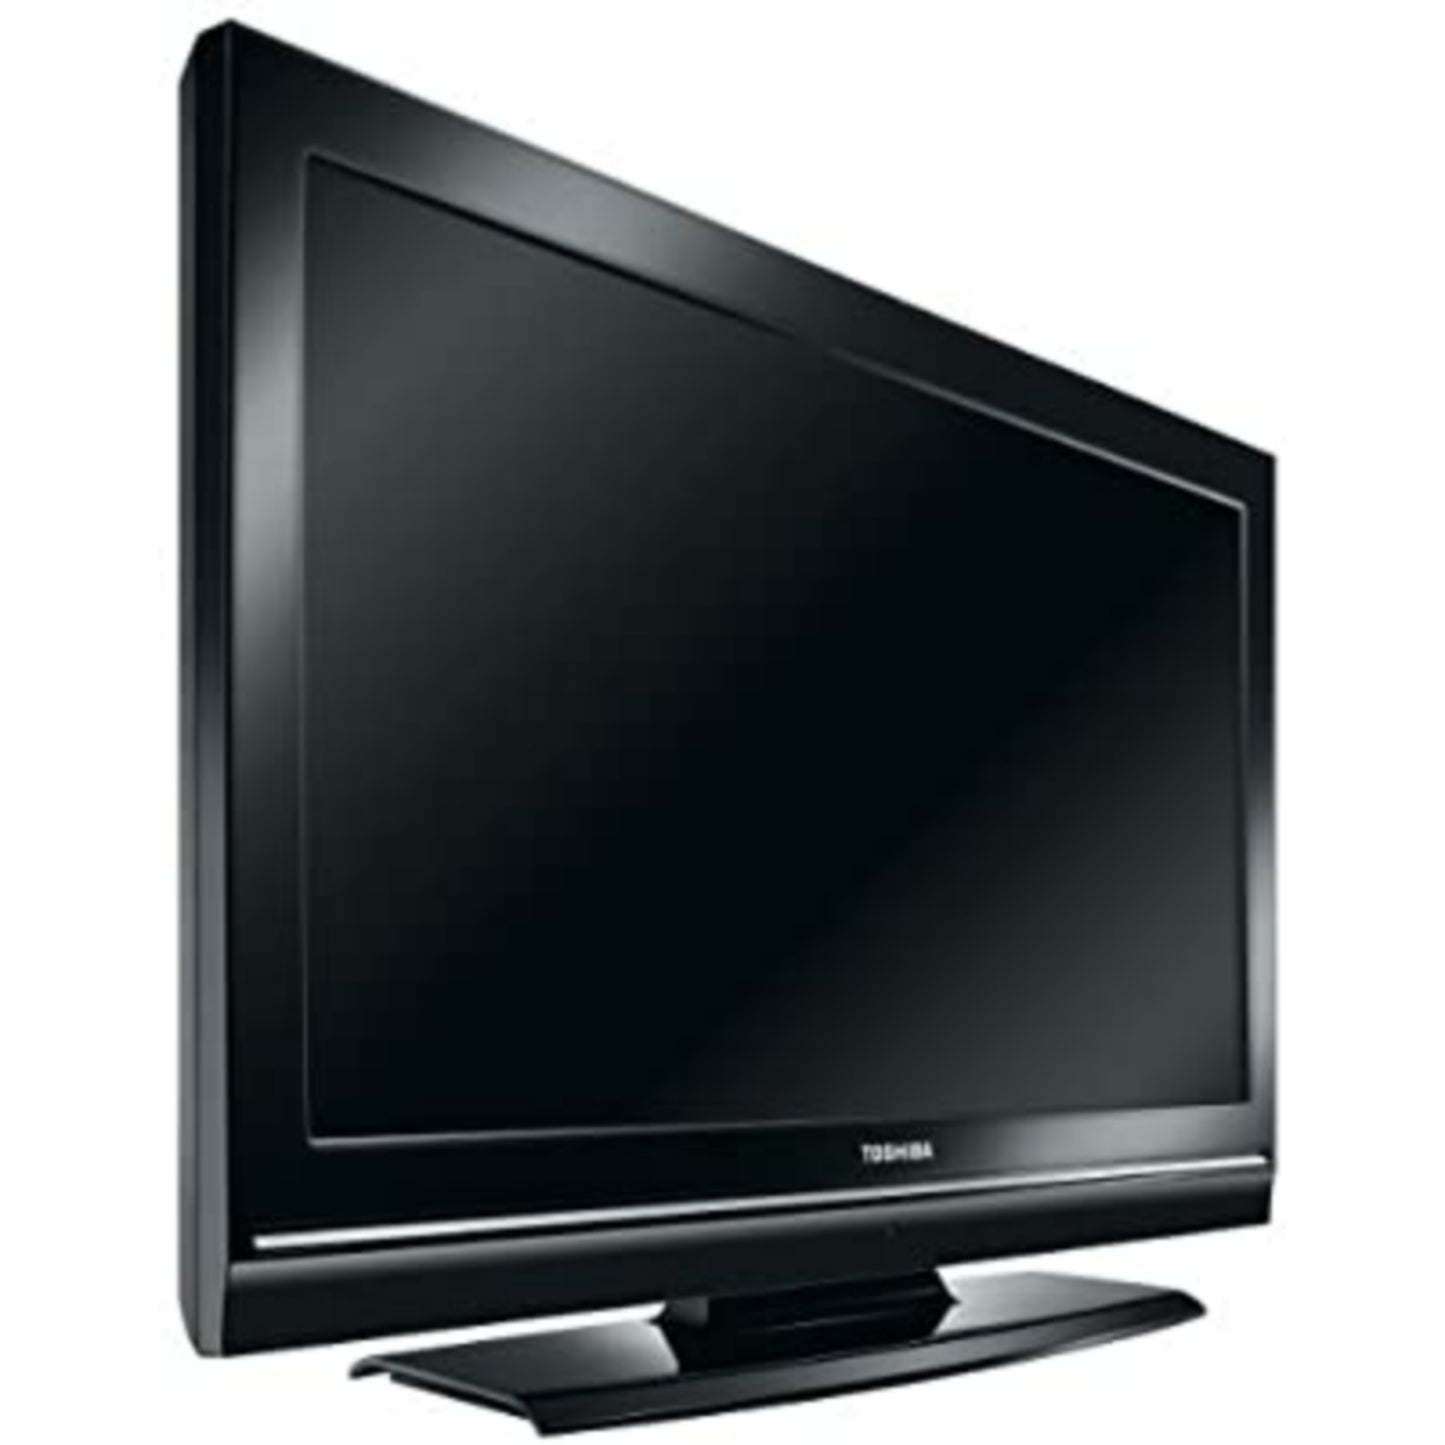 22 inch Toshiba LCD TV - London Used